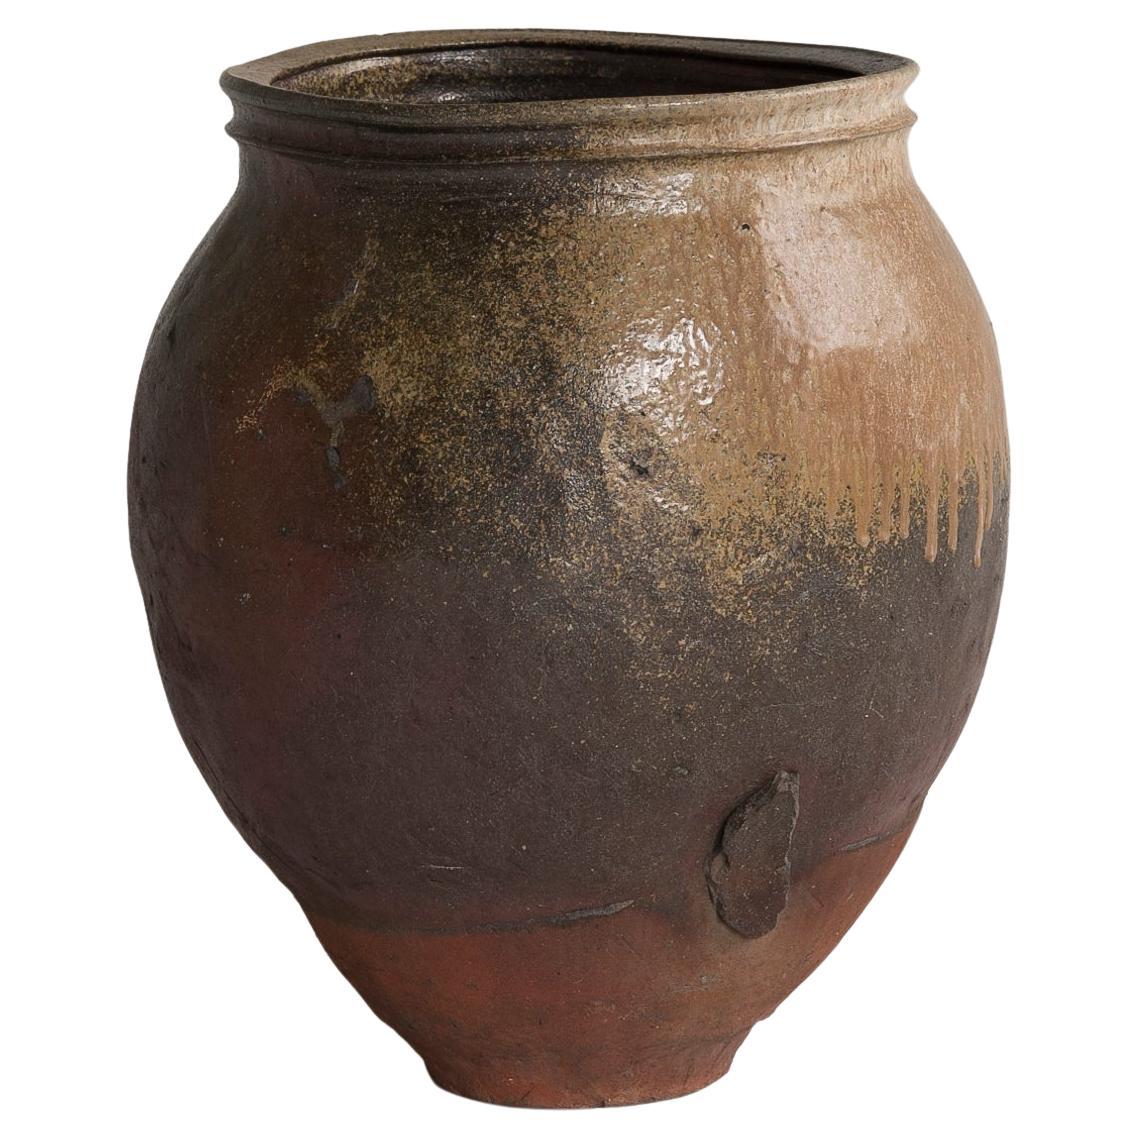 Japanese Antique Large "TOKONAME" Pottery 1800s-1900s/ Vase Wabi-Sabi Jar